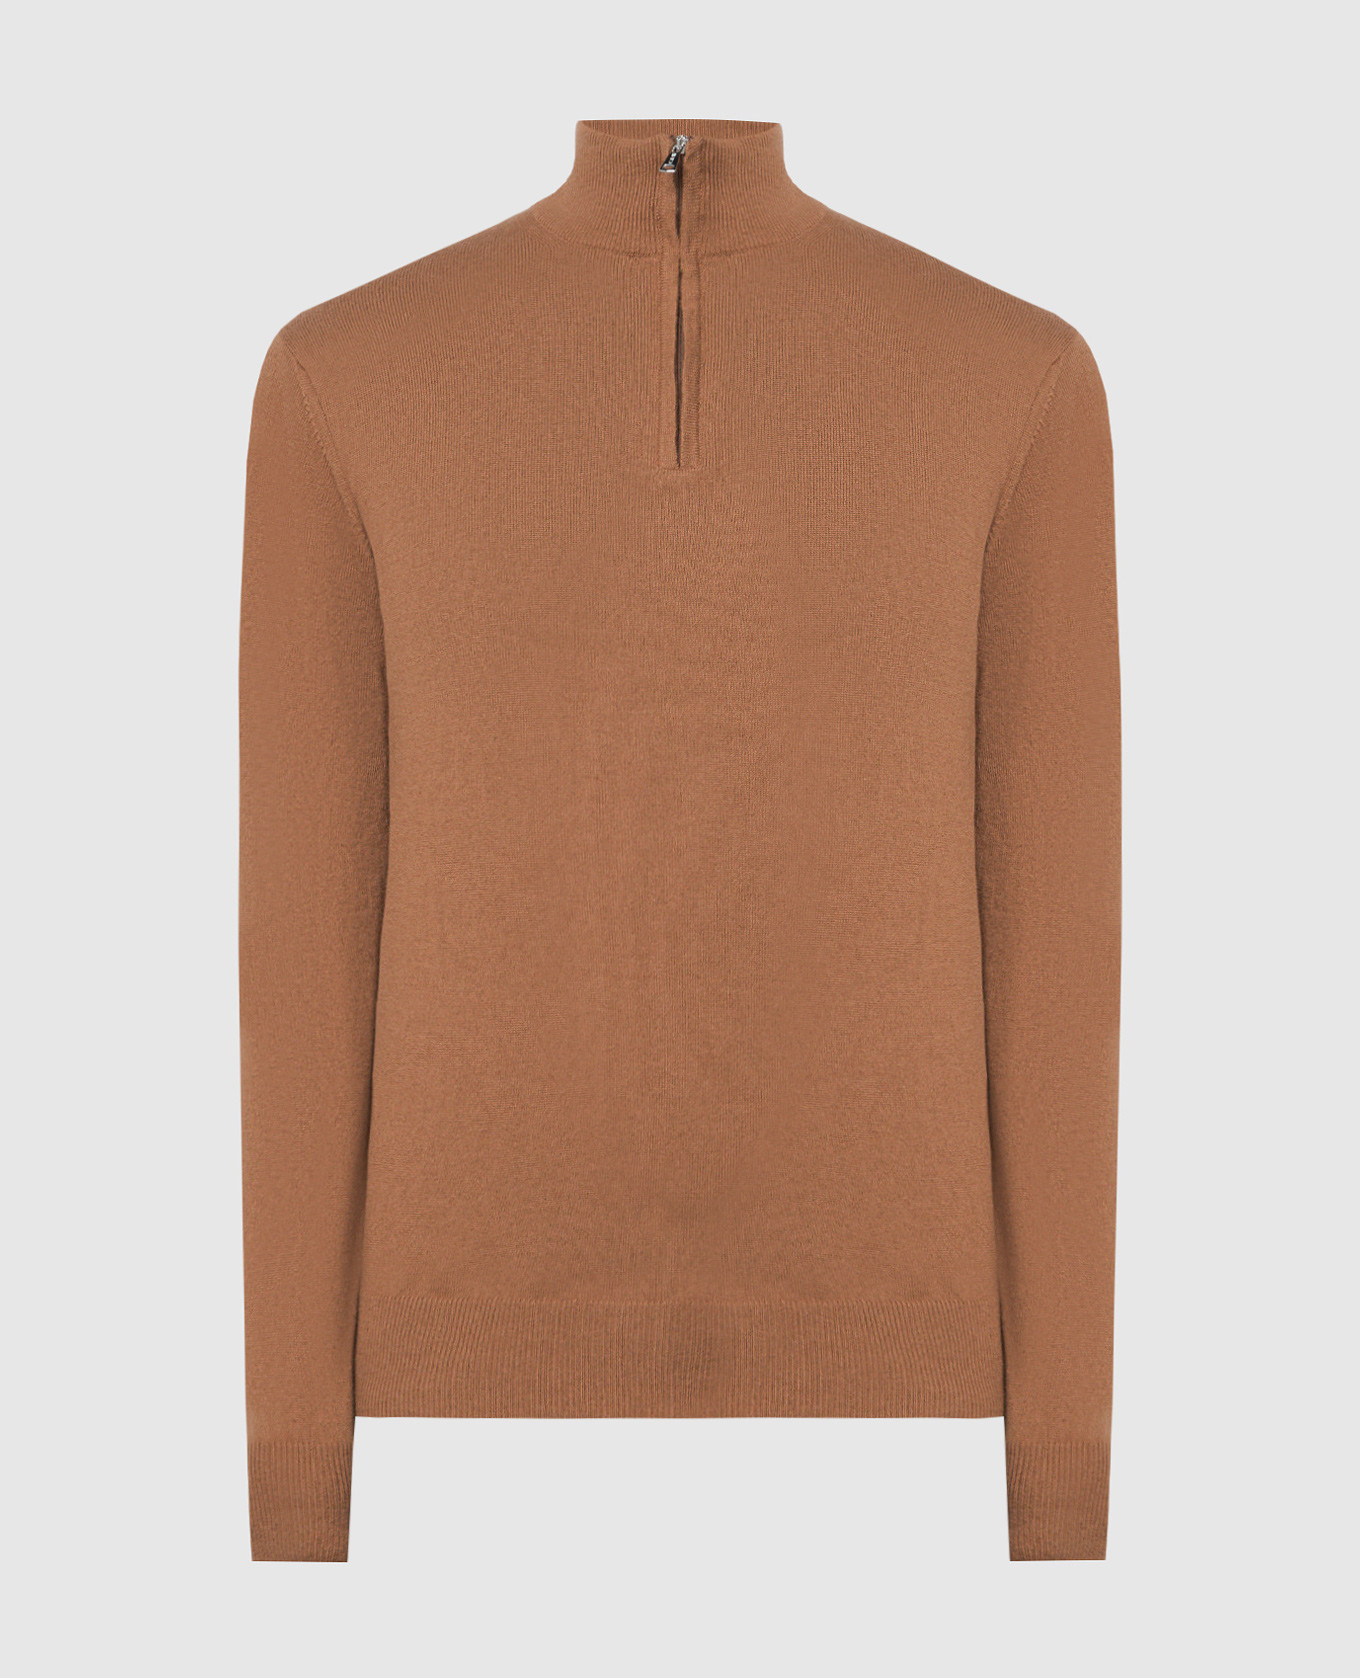 Brown cashmere jumper with zipper